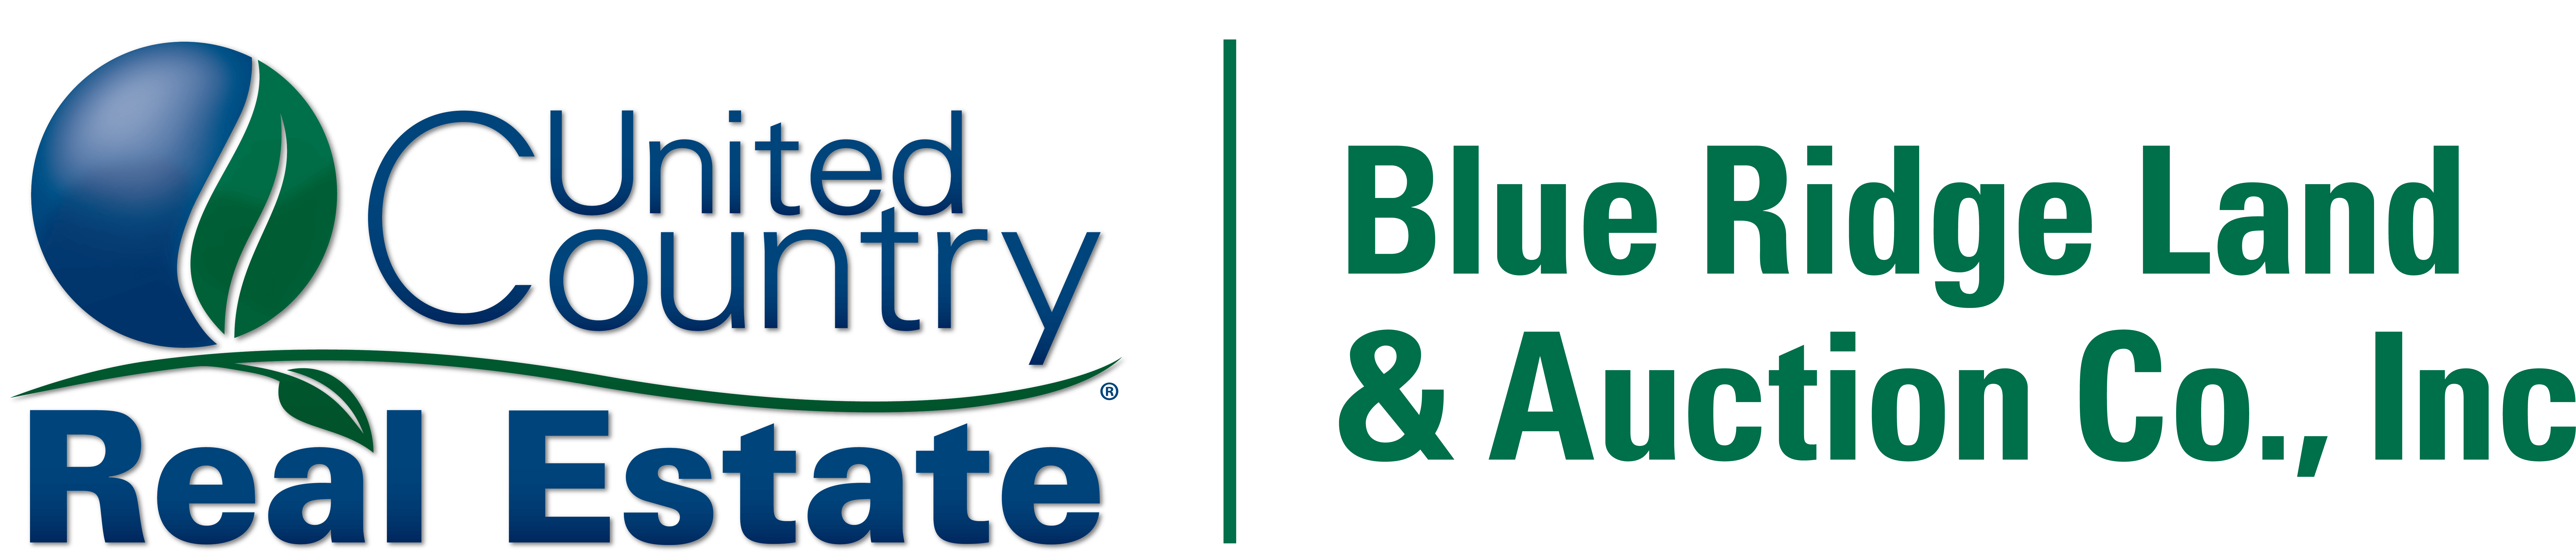 Blue Ridge Land and Auction